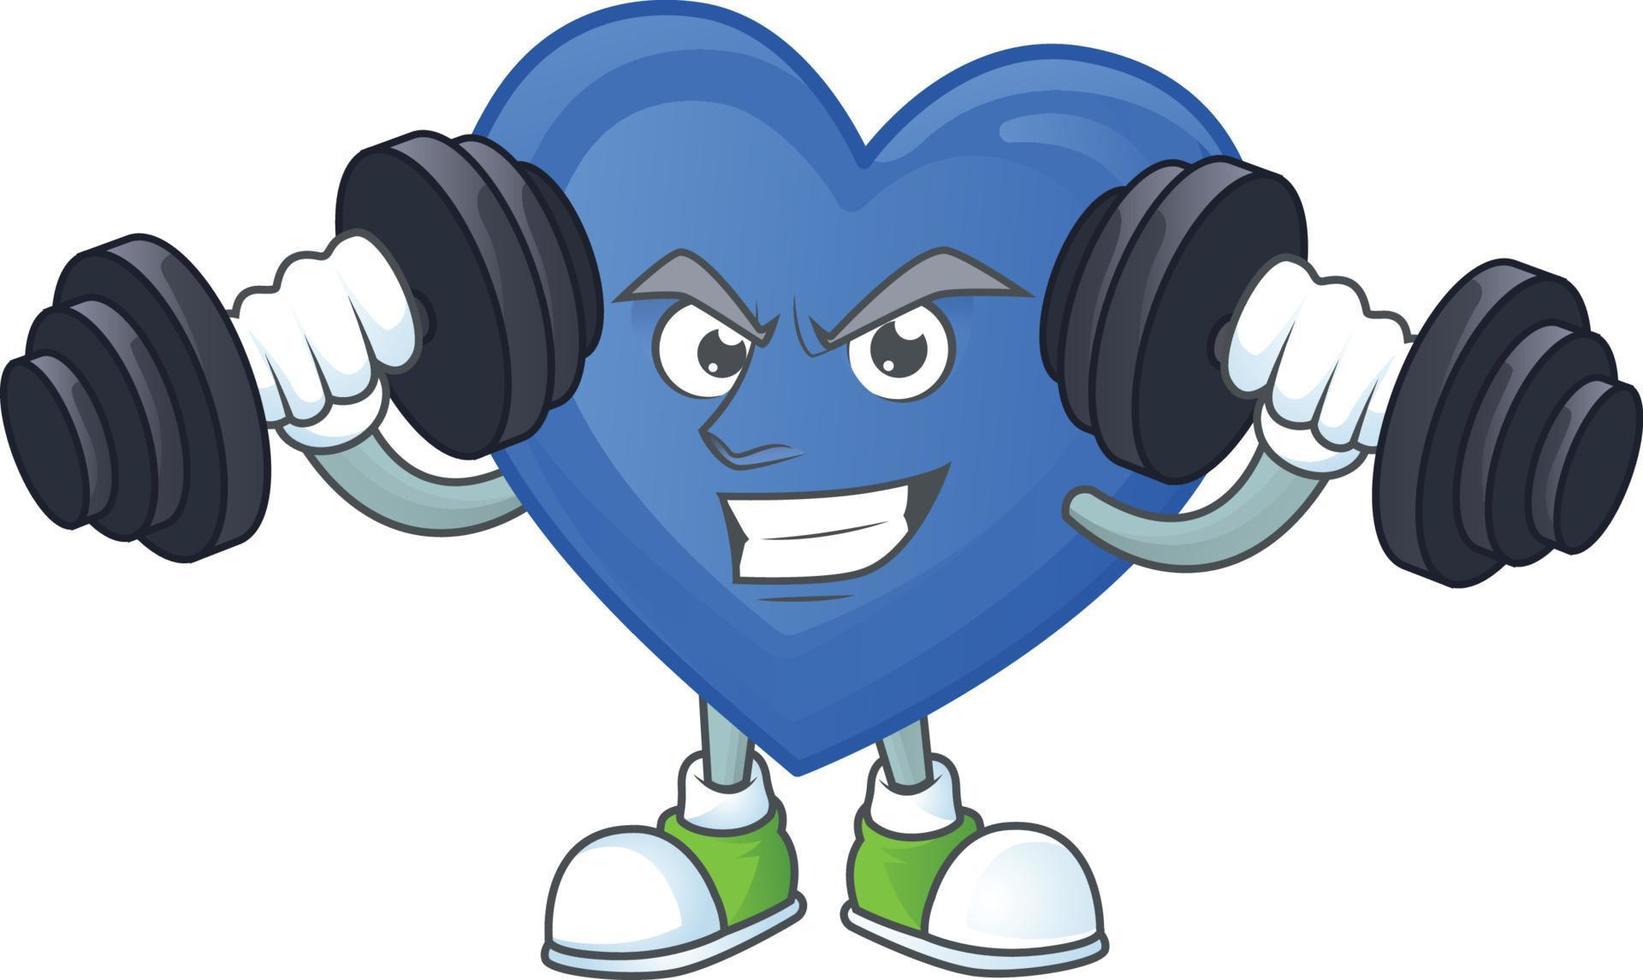 Blue love cartoon character style vector